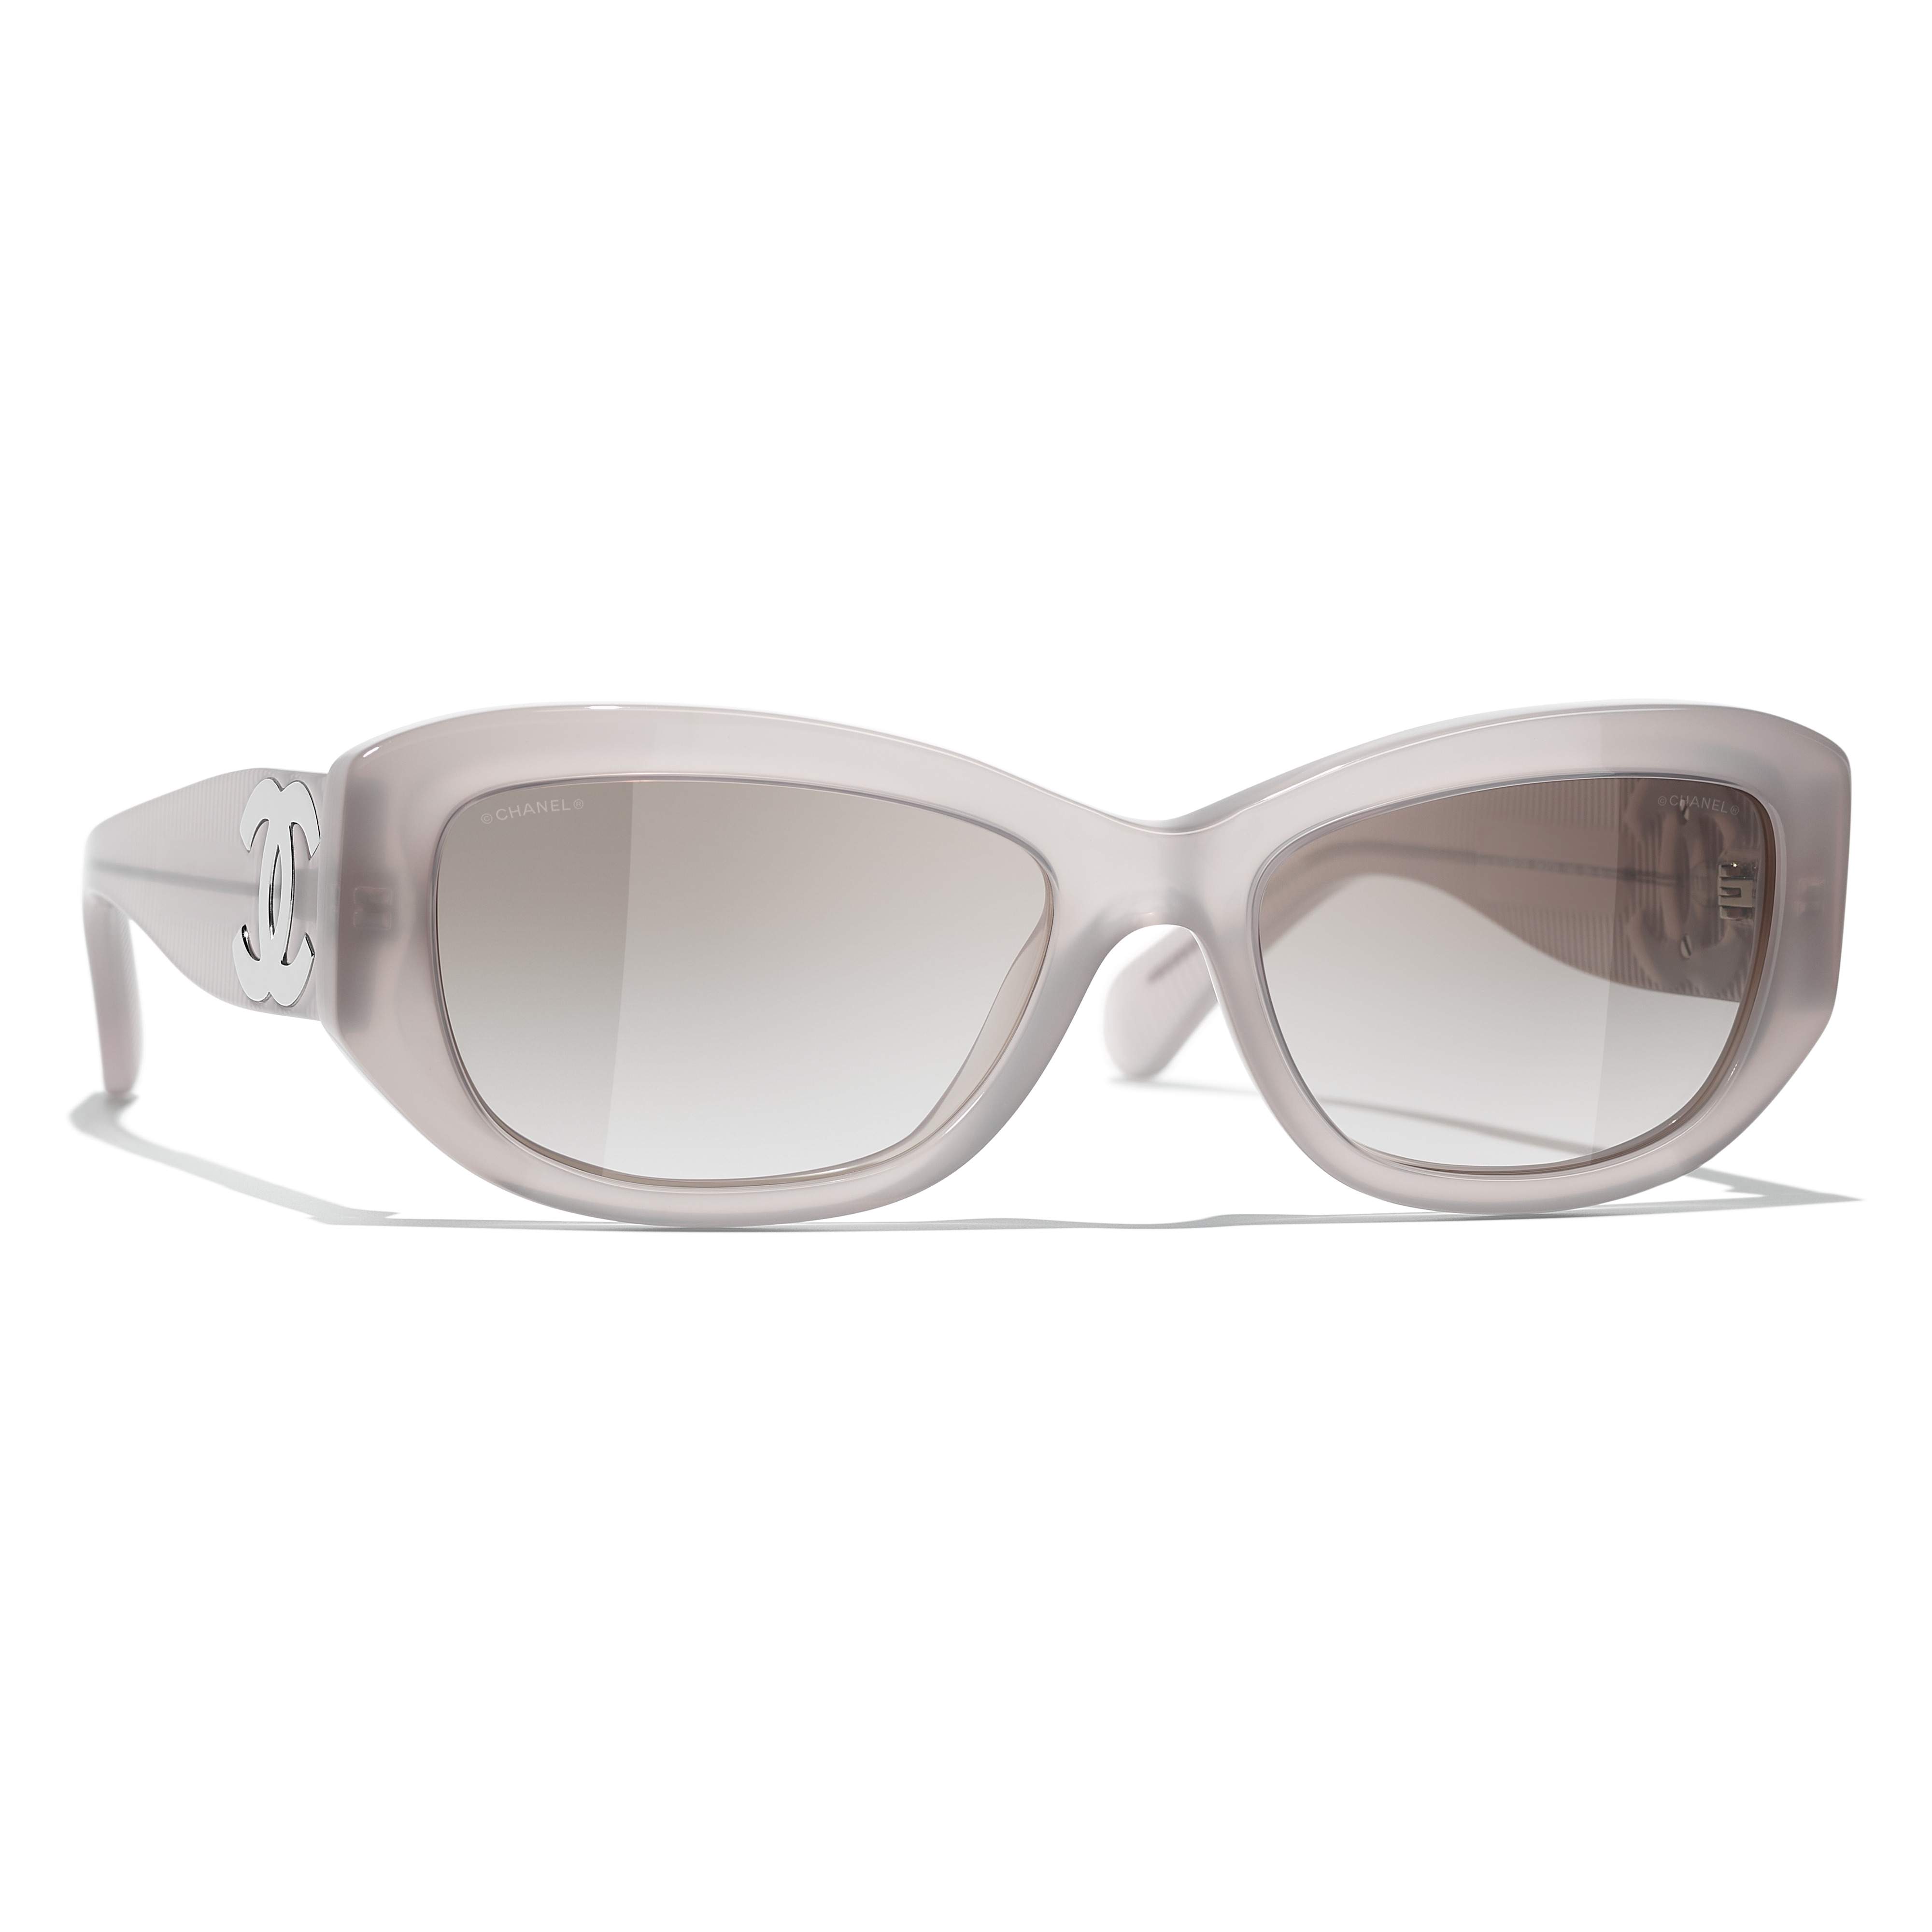 Sunglasses CHANEL CH5493 1730/S6 55-18 Light Grey in stock, Price 316,67 €